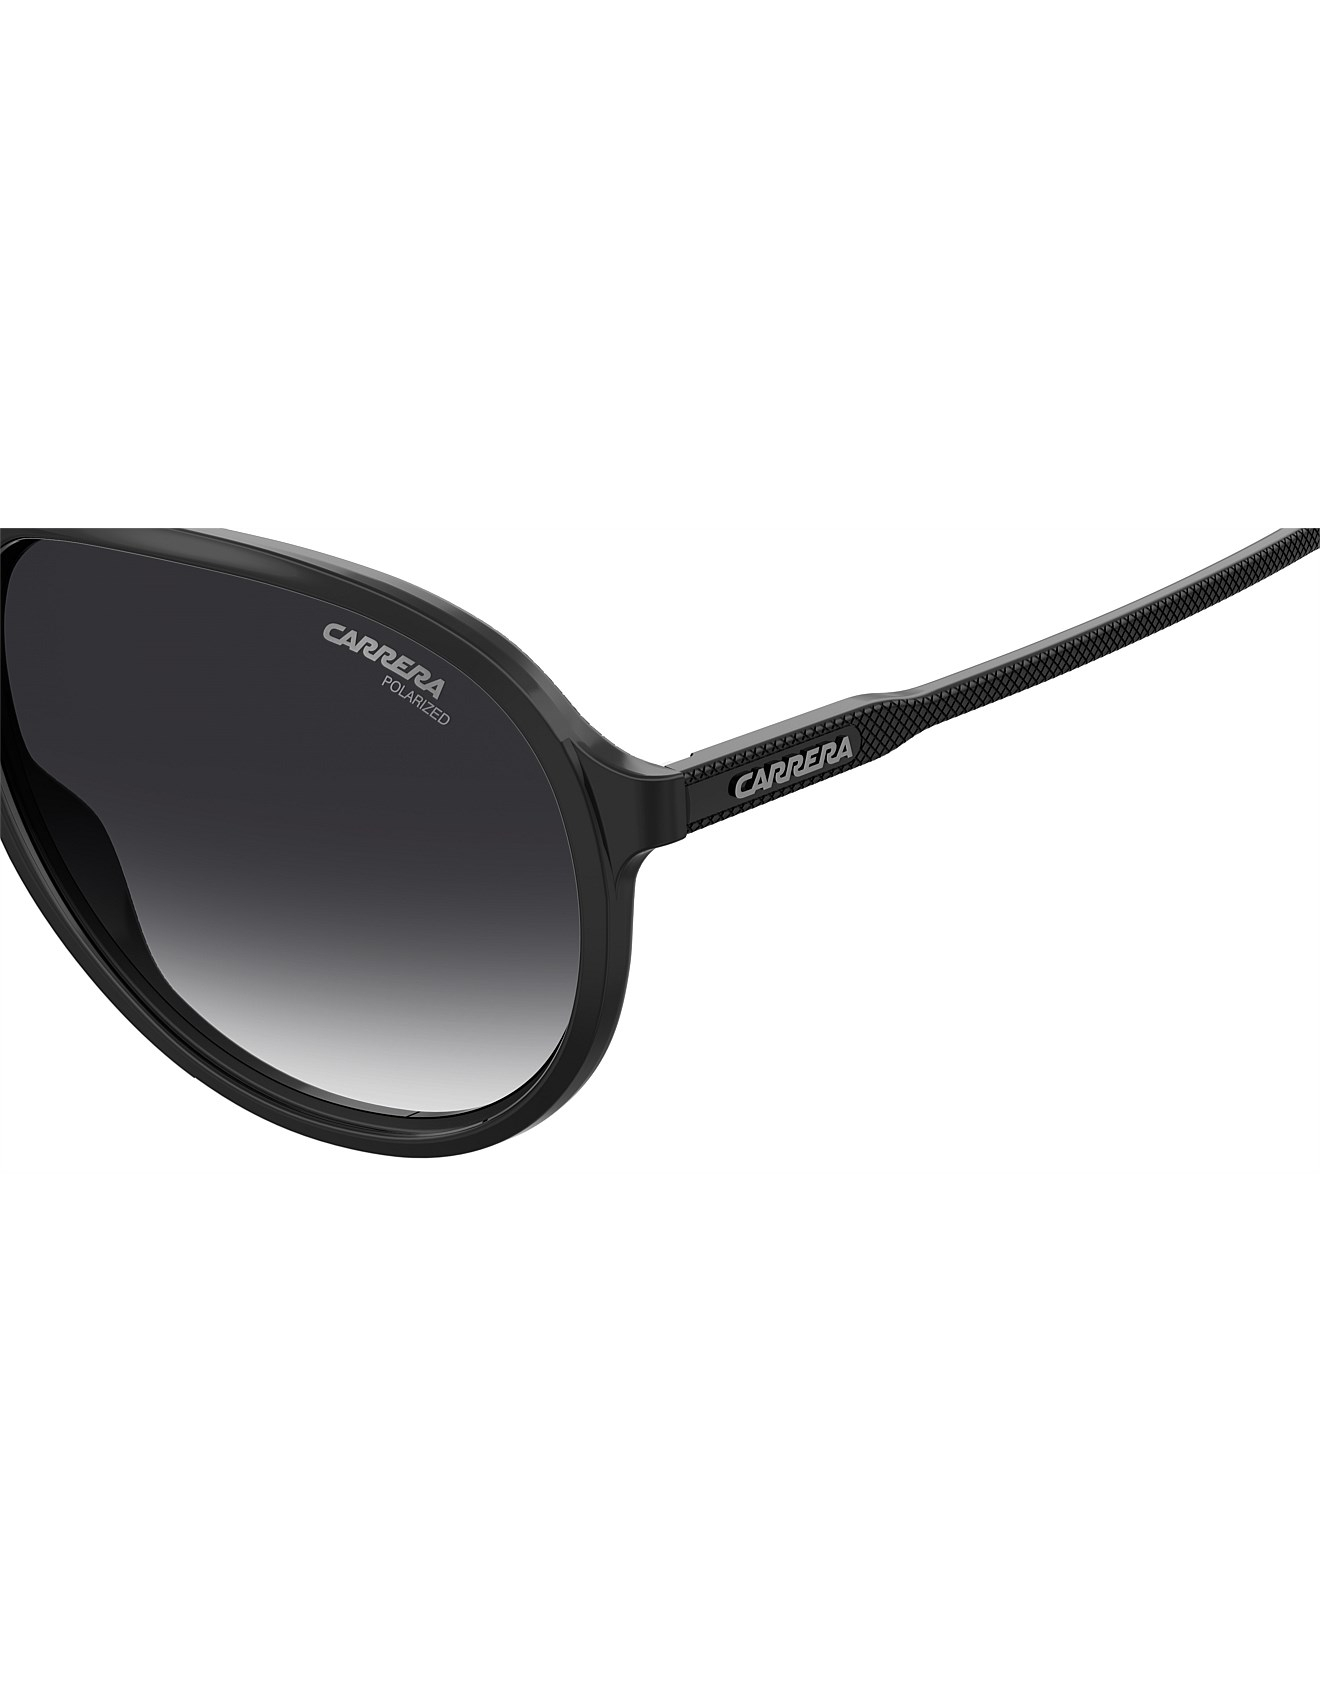 Carrera | Buy Carrera Sunglasses Online | David Jones concernant Buy Carrera Online